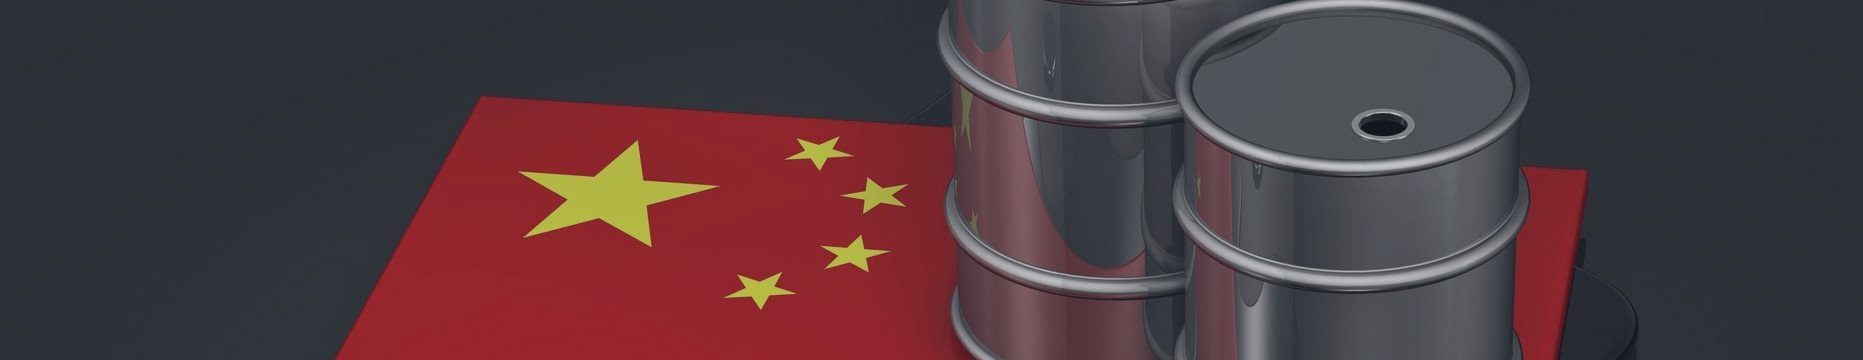 США полностью остановили поставки нефти в Китай